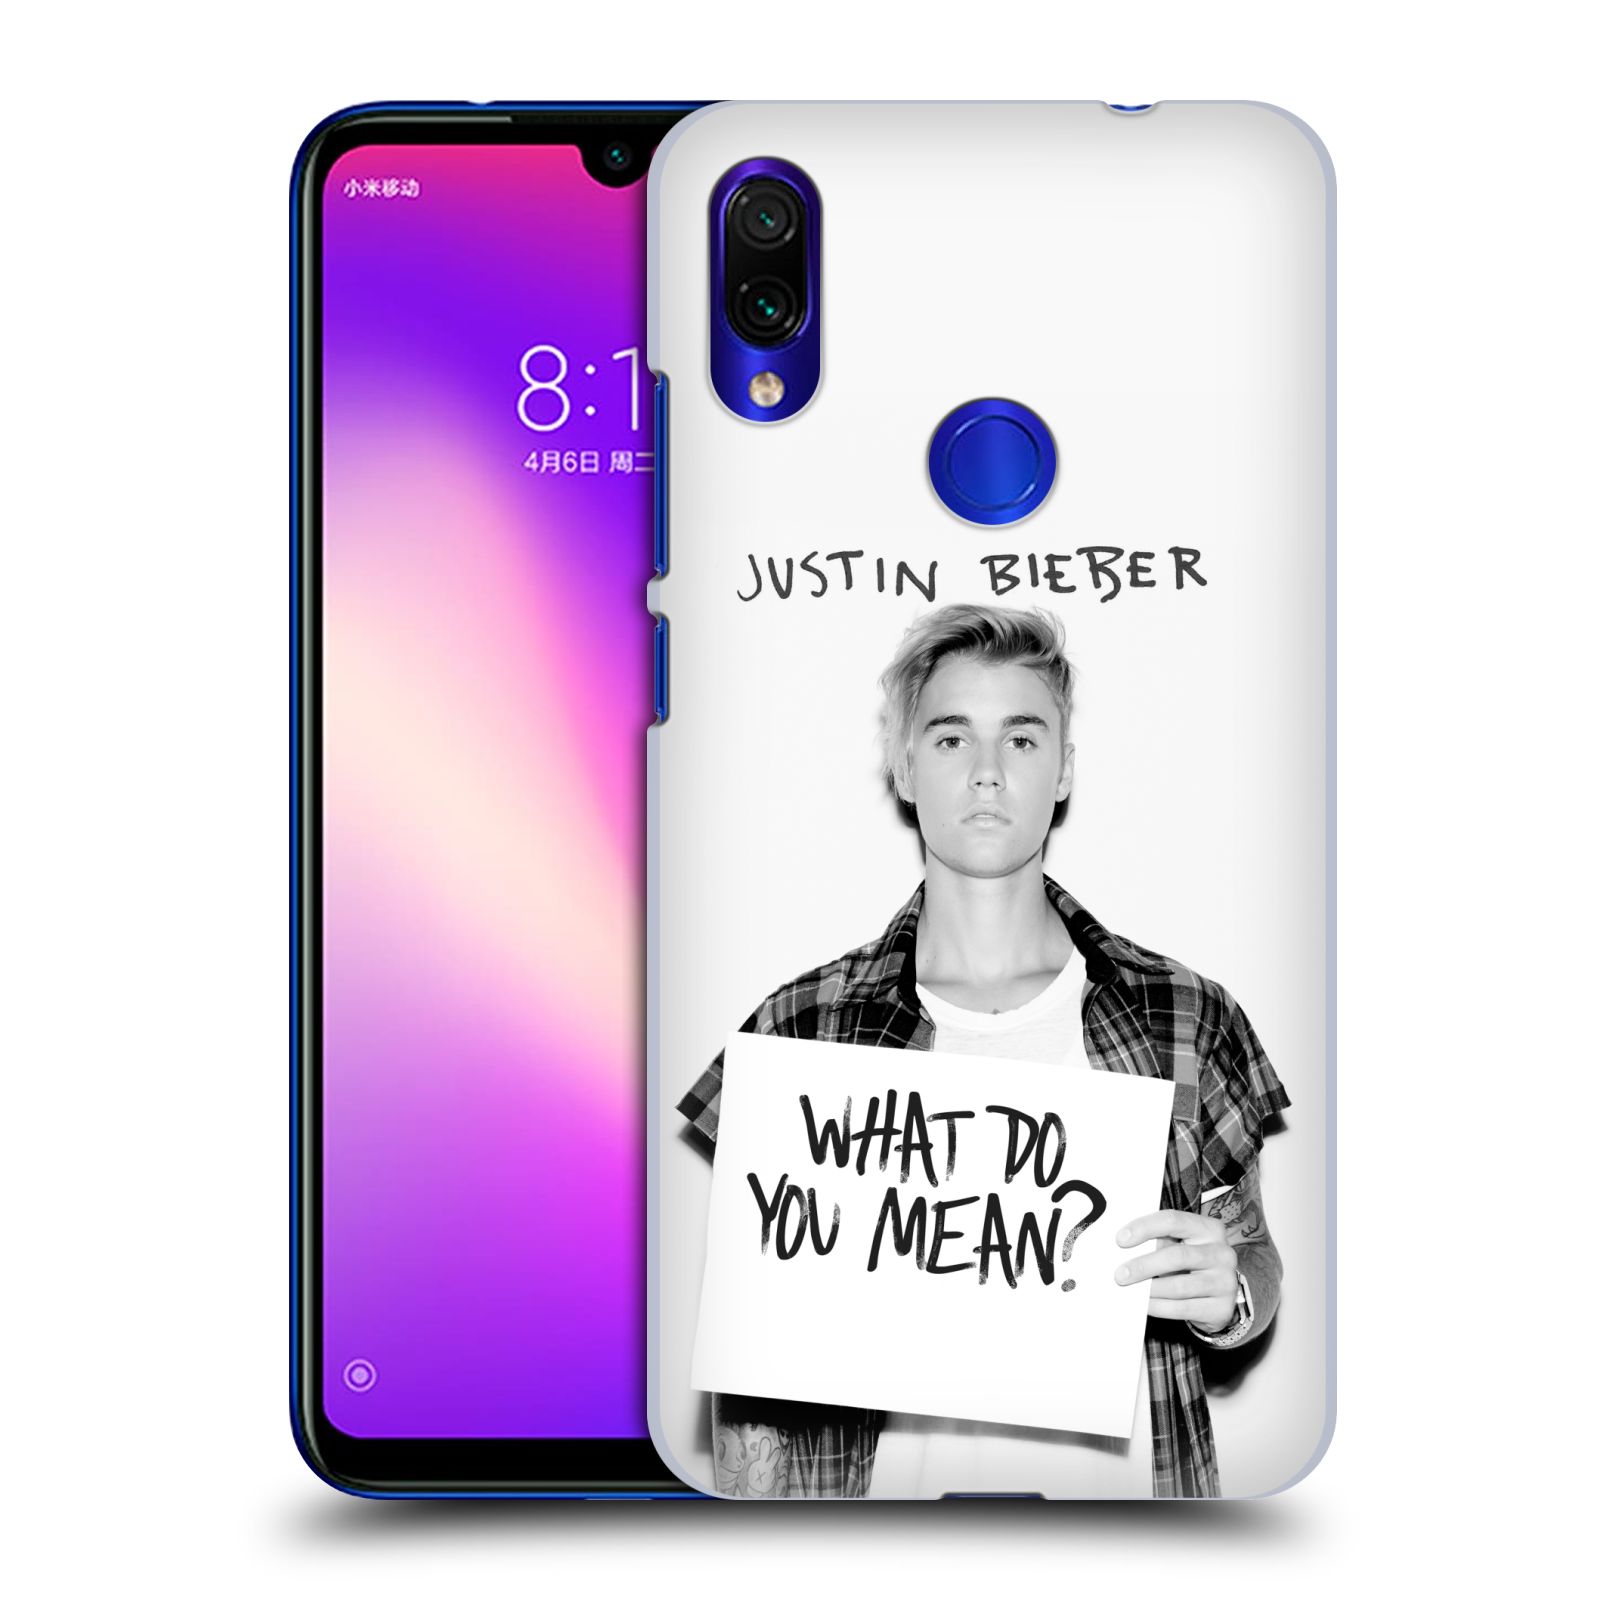 Pouzdro na mobil Xiaomi Redmi Note 7 - Head Case - Justin Bieber foto Purpose What do you mean